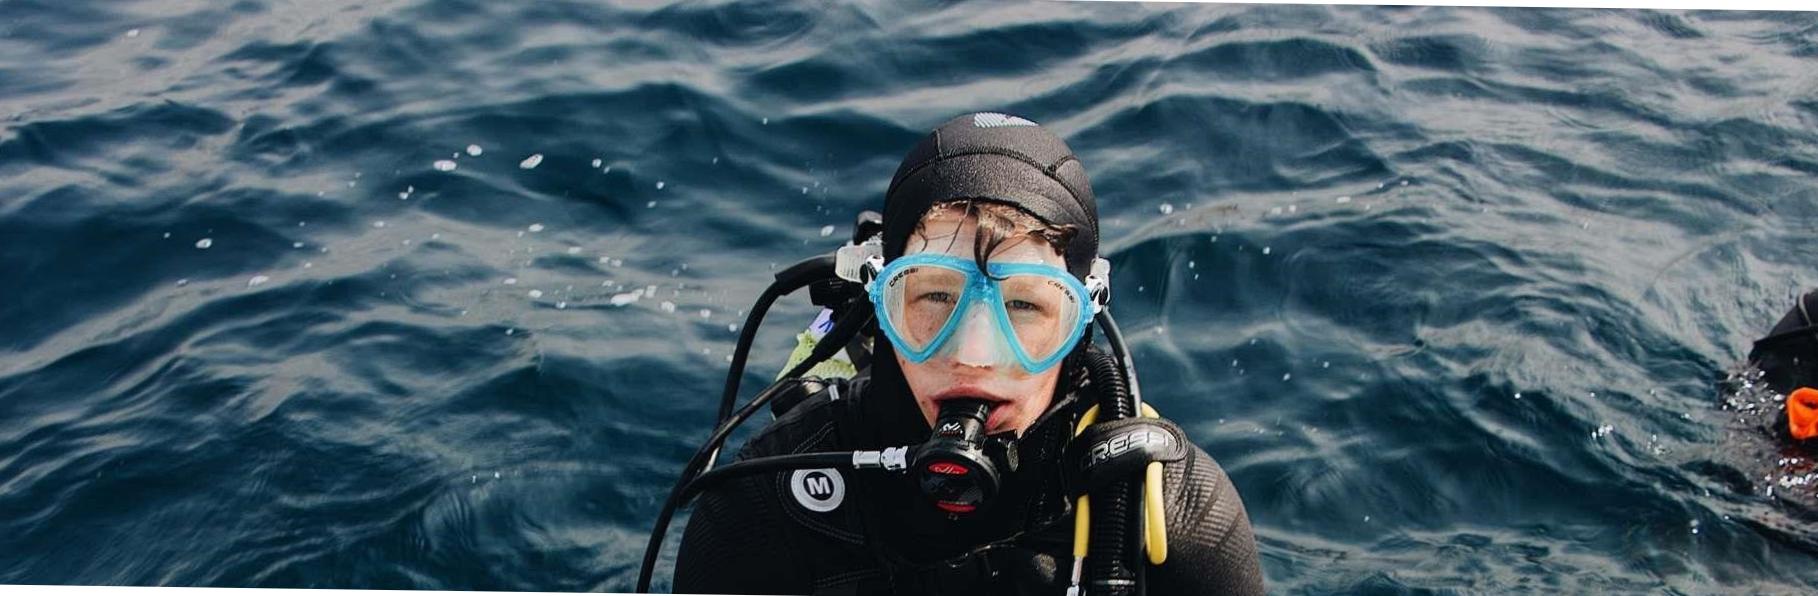  Scuba Diving Signals for Communication 